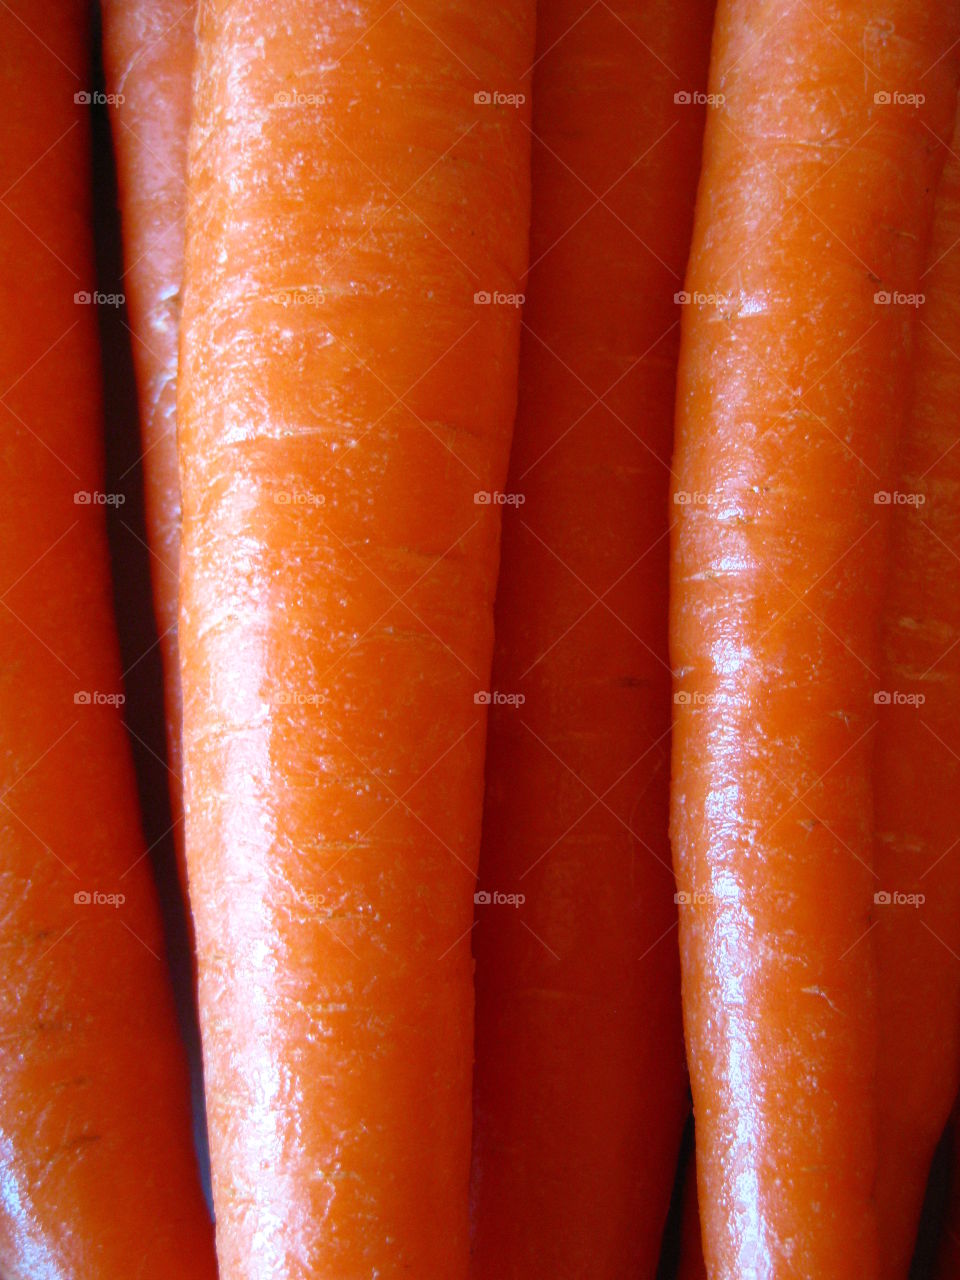 Carrots. Fresh, raw carrots.